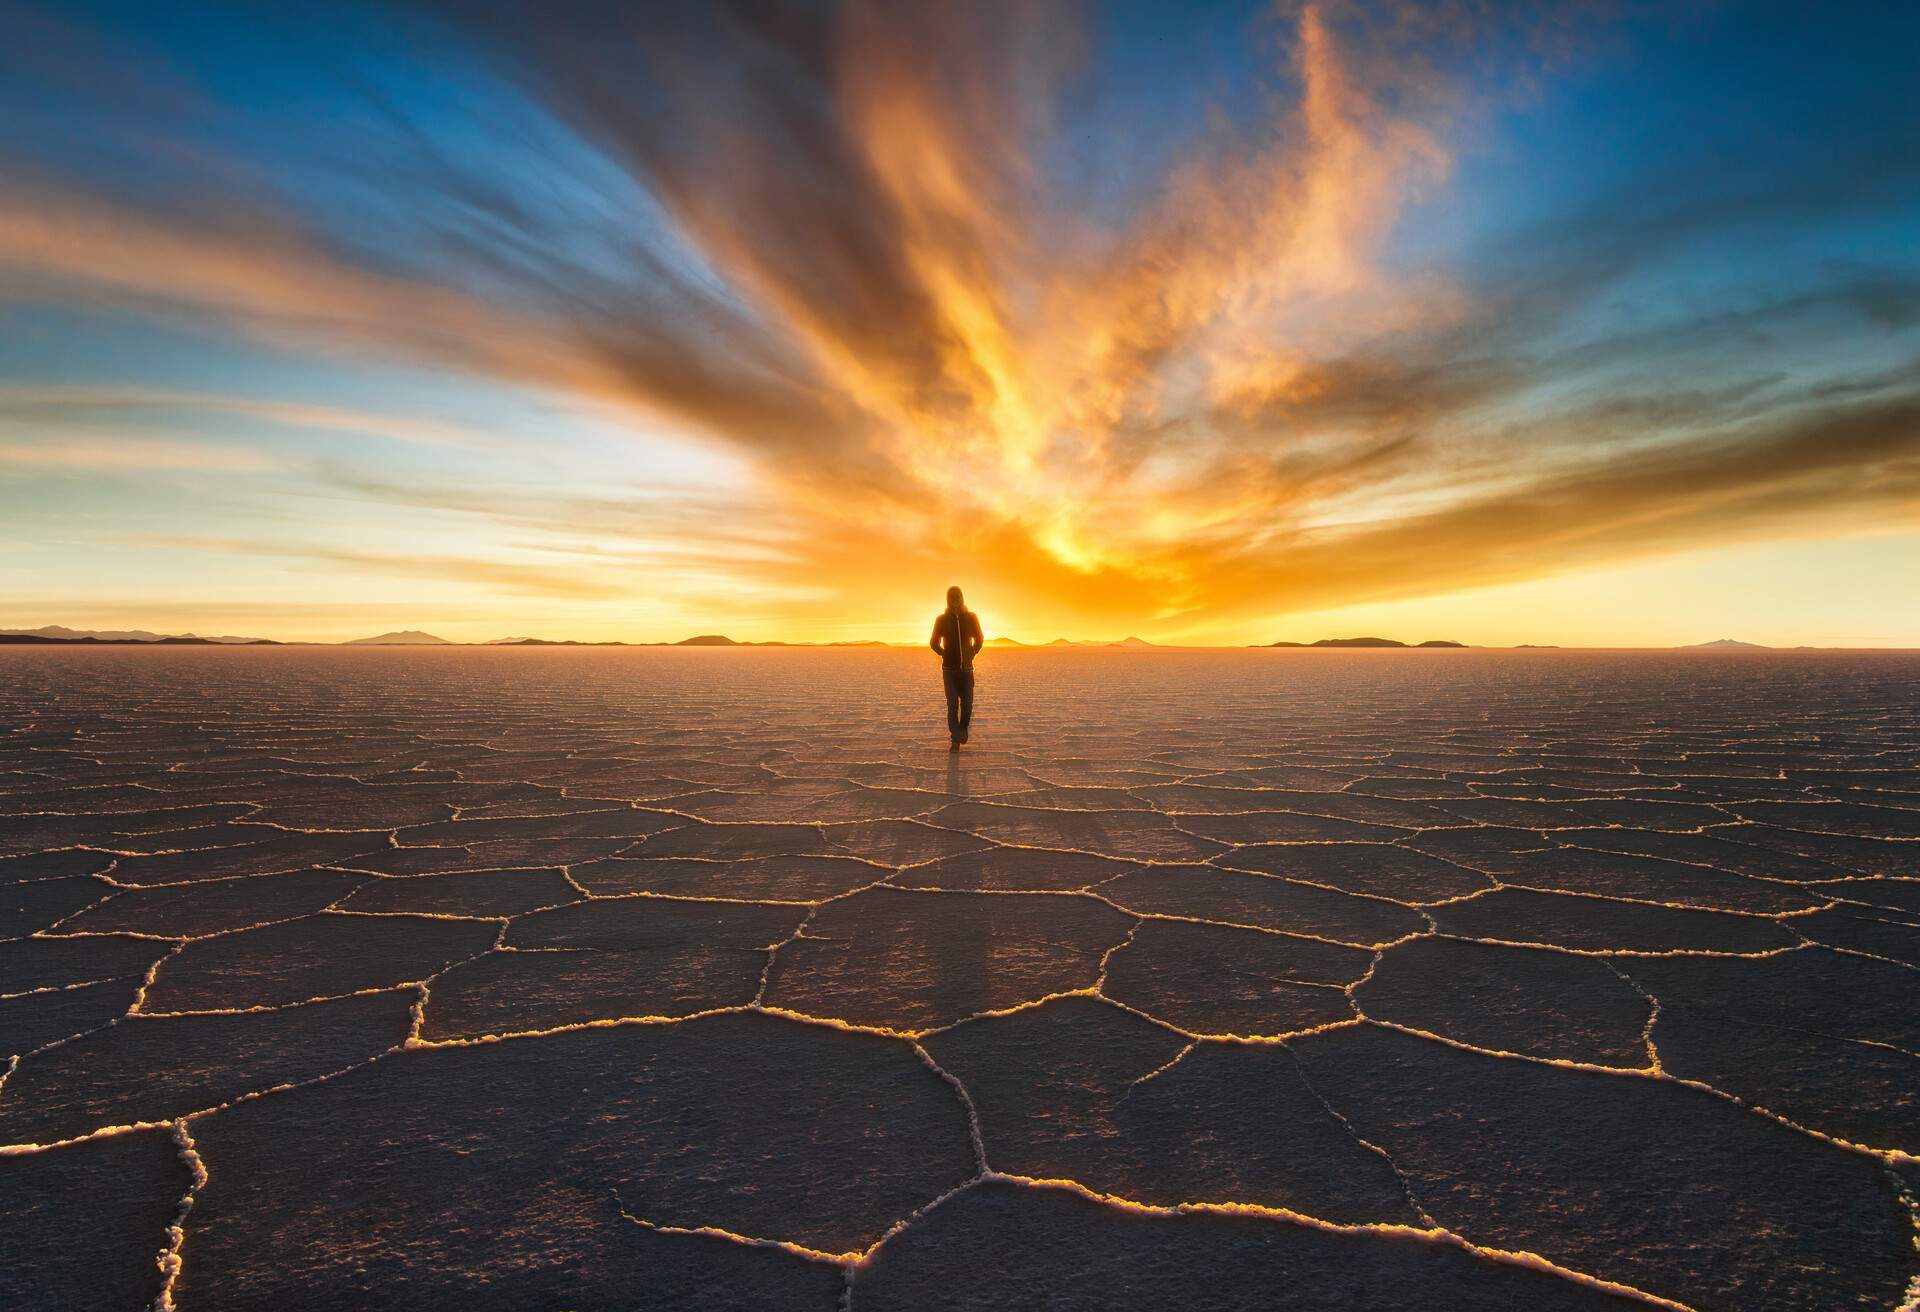 A person walks across a salt landscape with hexagonal patterns towards a sunset on the horizon.